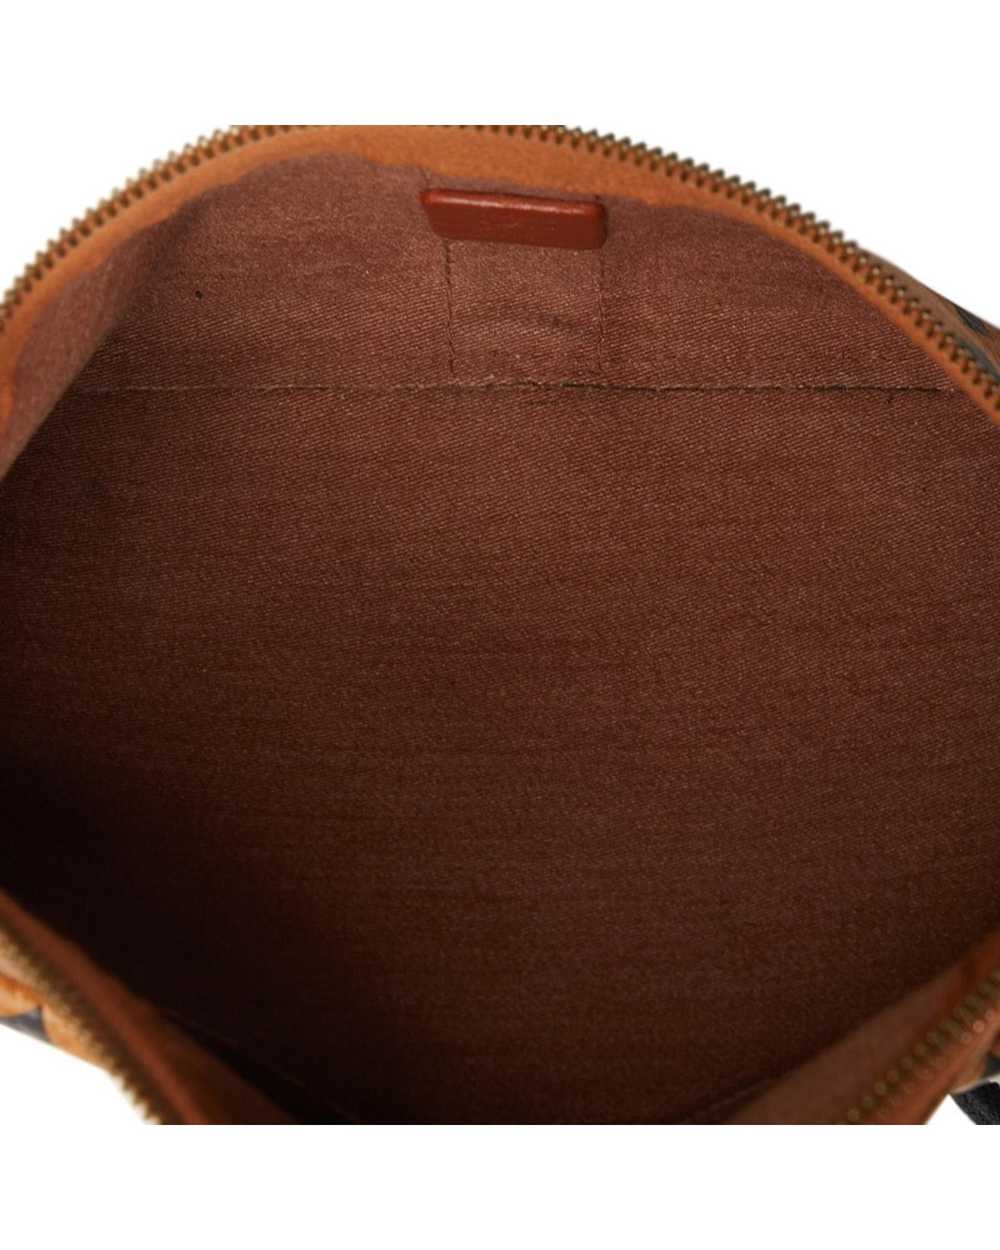 MCM Brown Leather Fanny Pack/Sling Bag - image 6